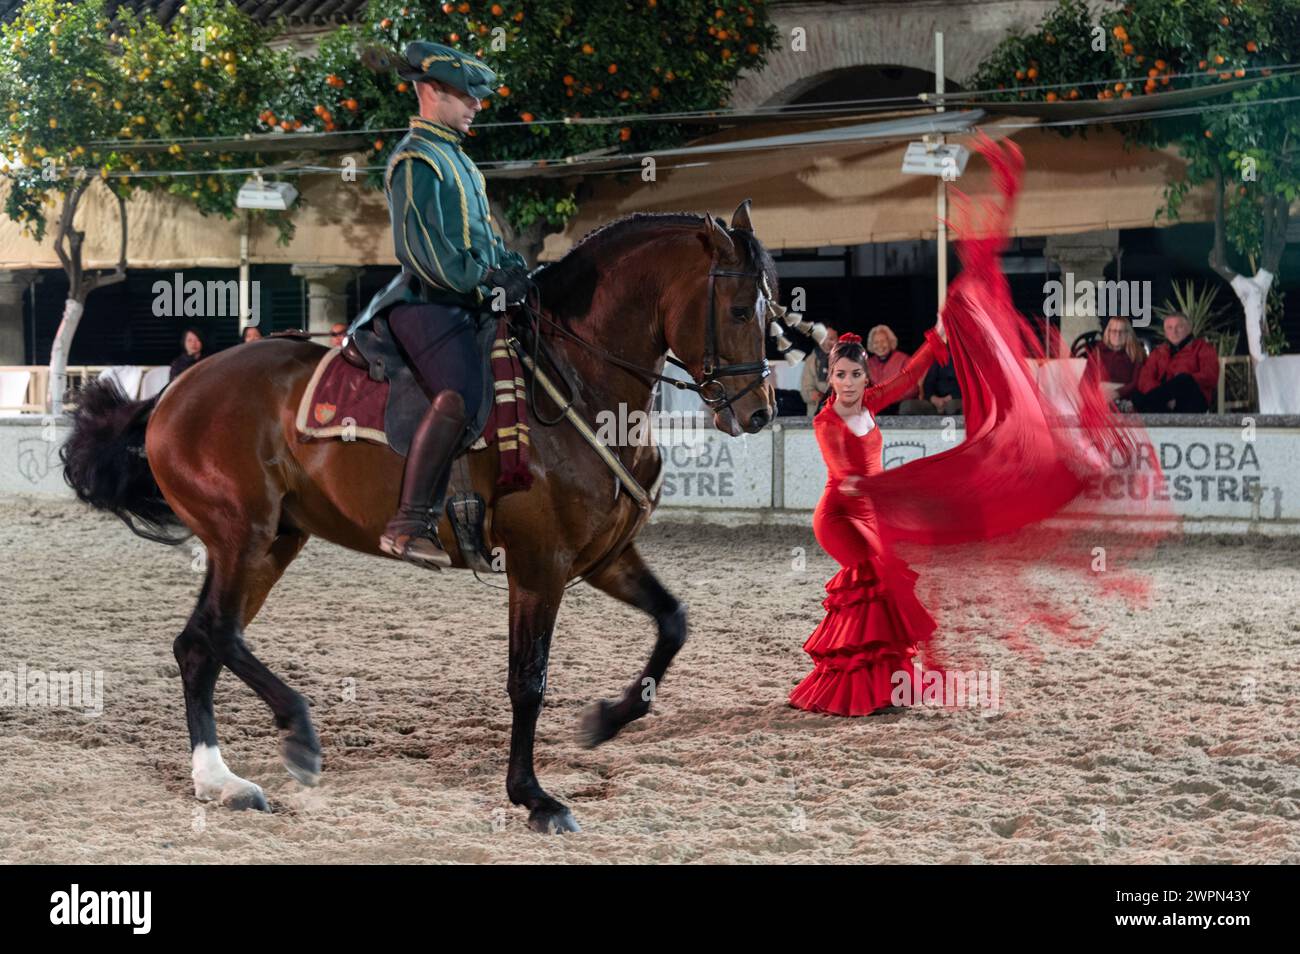 Las Caballerizas Reales de Cordoba (The Royal Stables of Cordoba)    A rider wearing the uniform of ‘Traje 20 aniversario,’ on his horse performing a Stock Photo